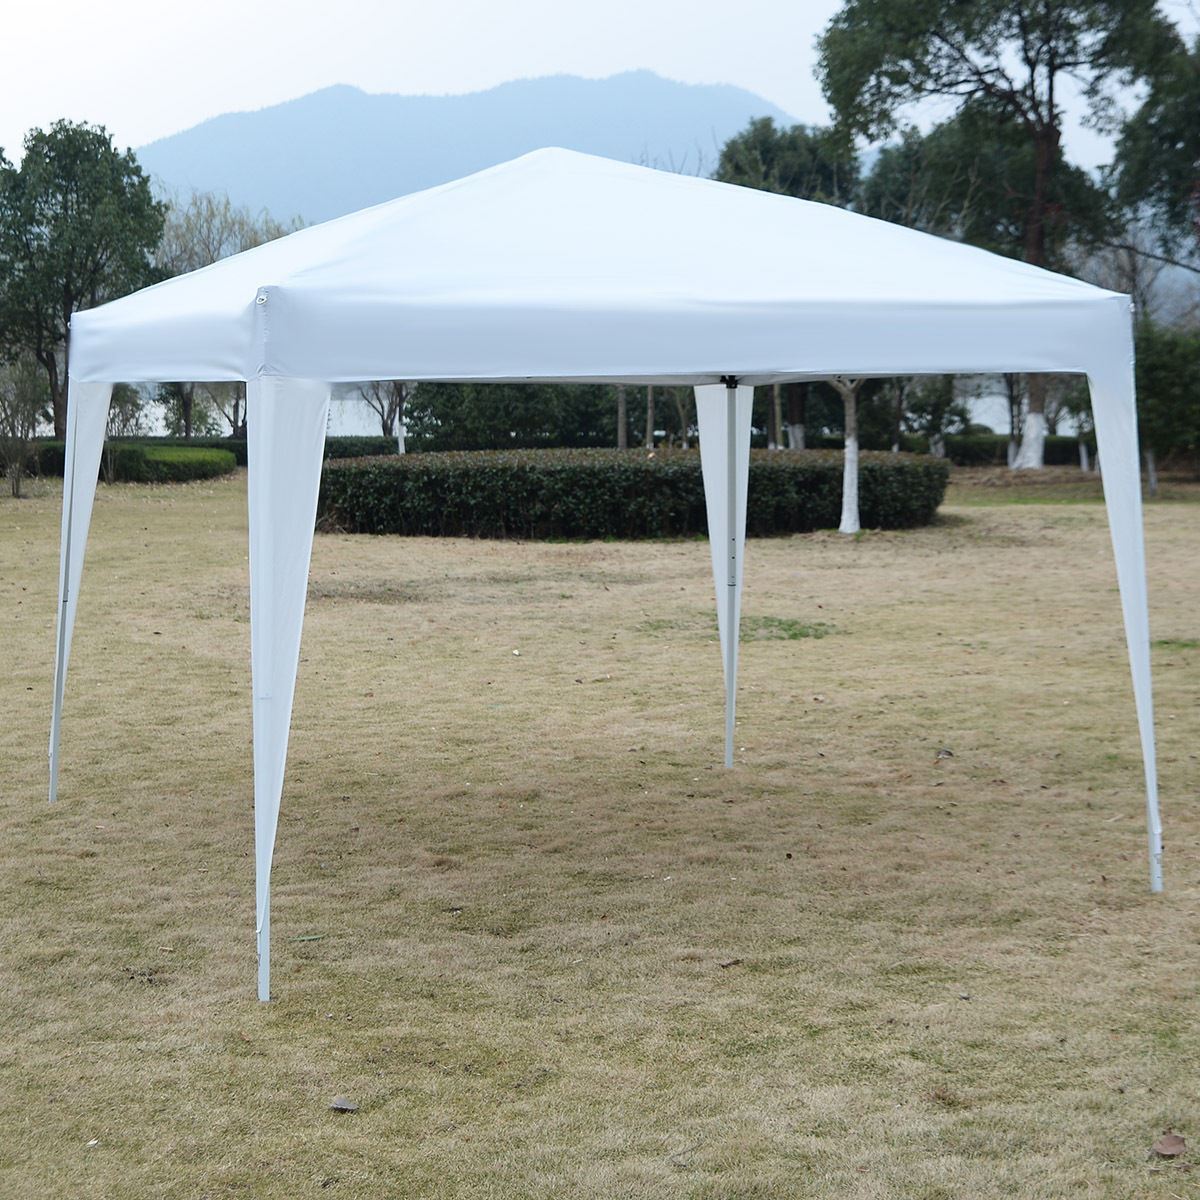 Cb19150 10 X 10 Ft. Outdoor Ez Pop Up Tent Gazebo Canopy - White